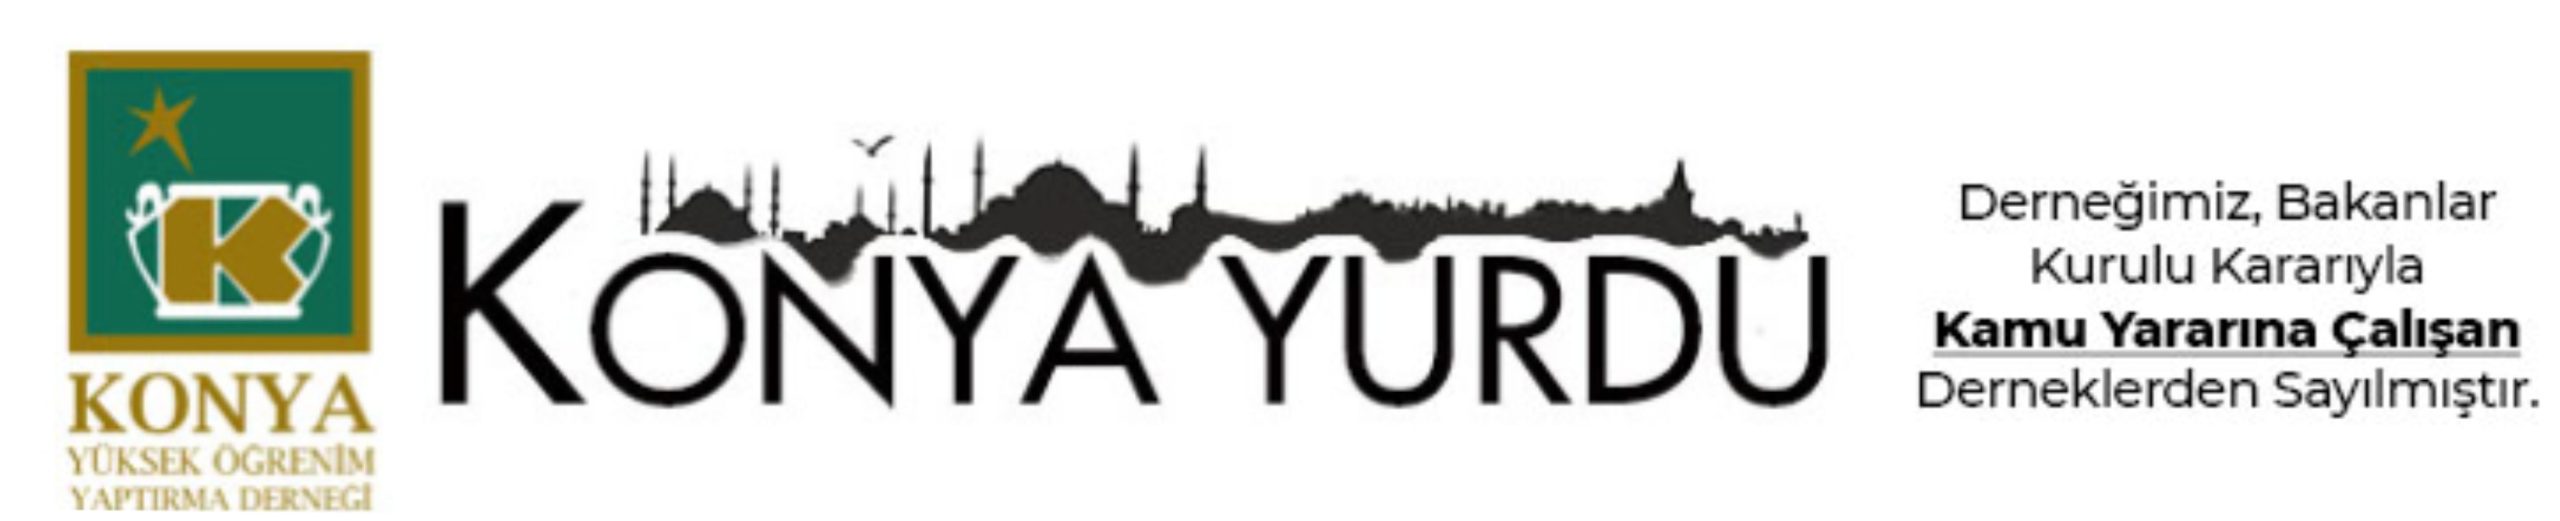 Konya Yurdu